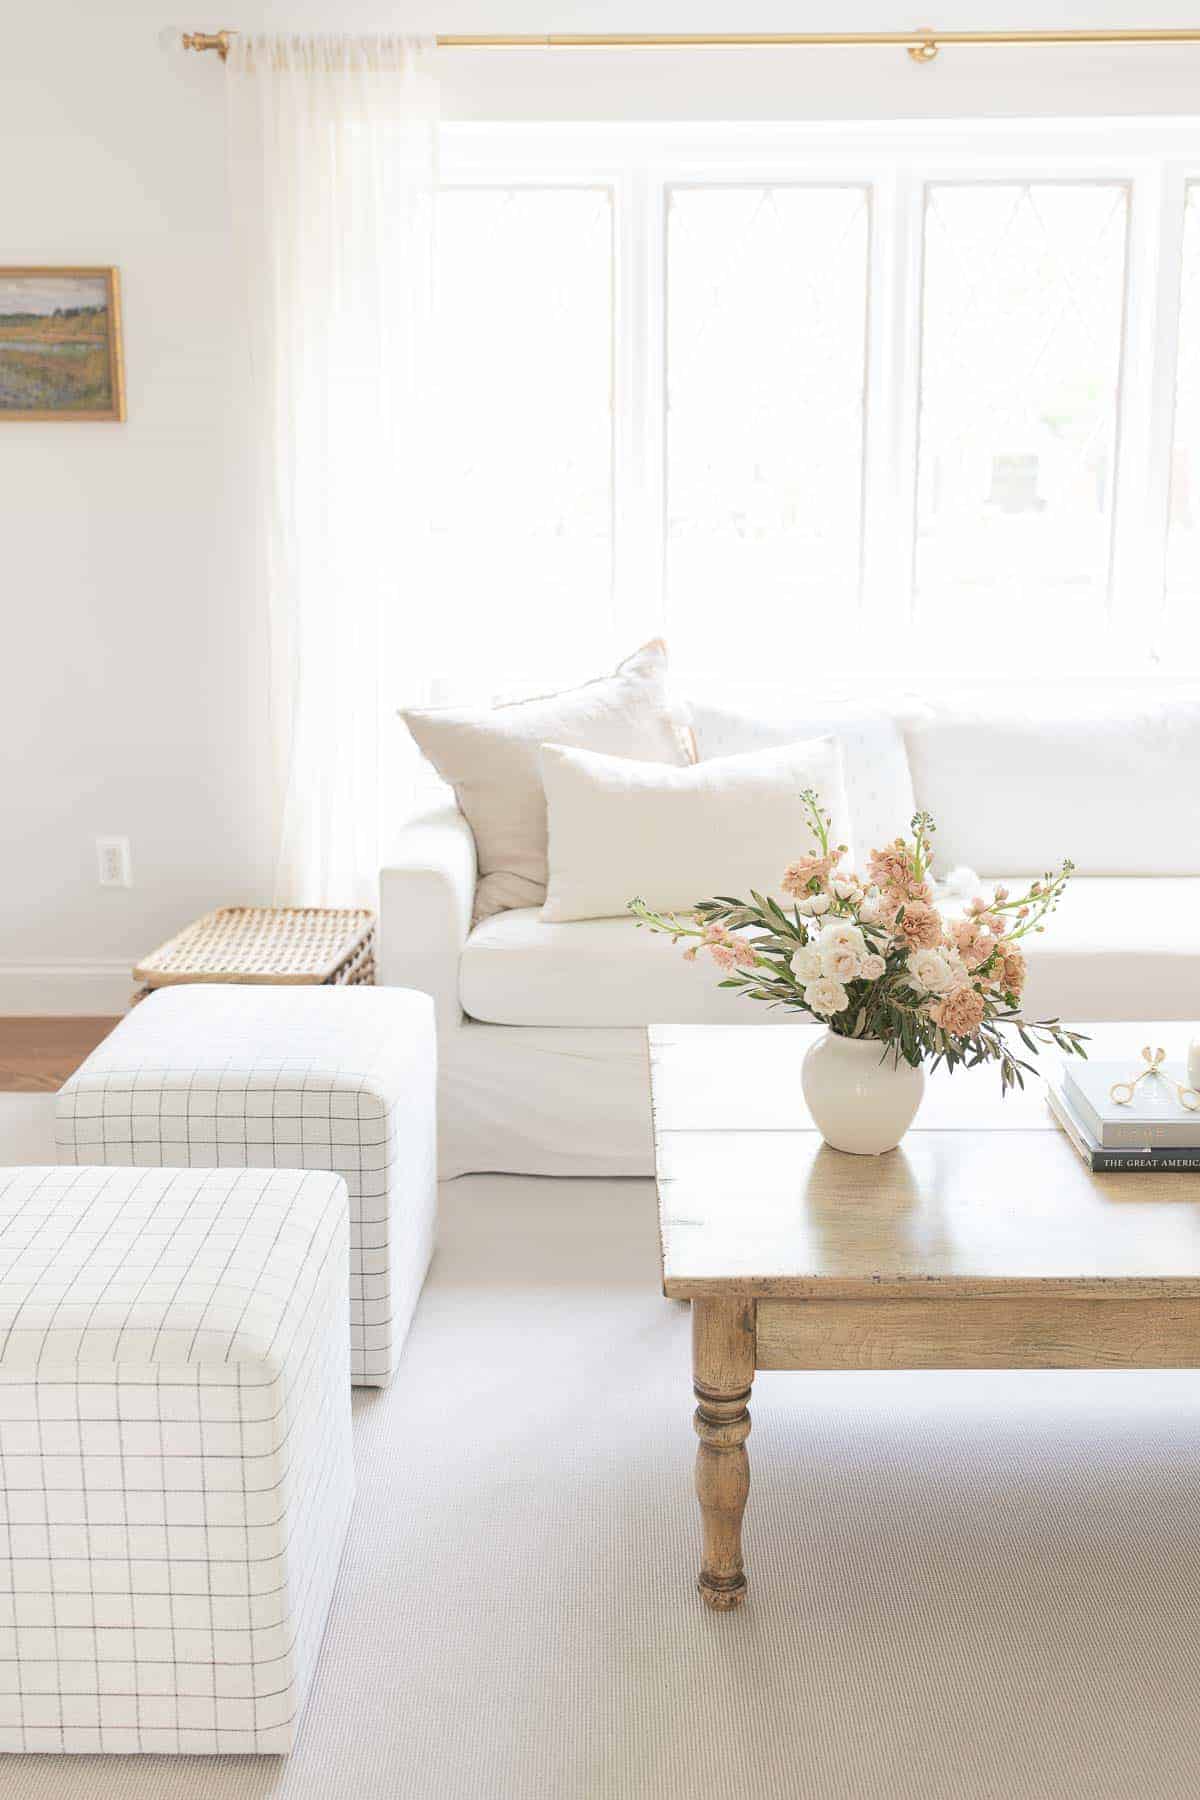 10 Simple Spring Home Decorating Ideas | Julie Blanner